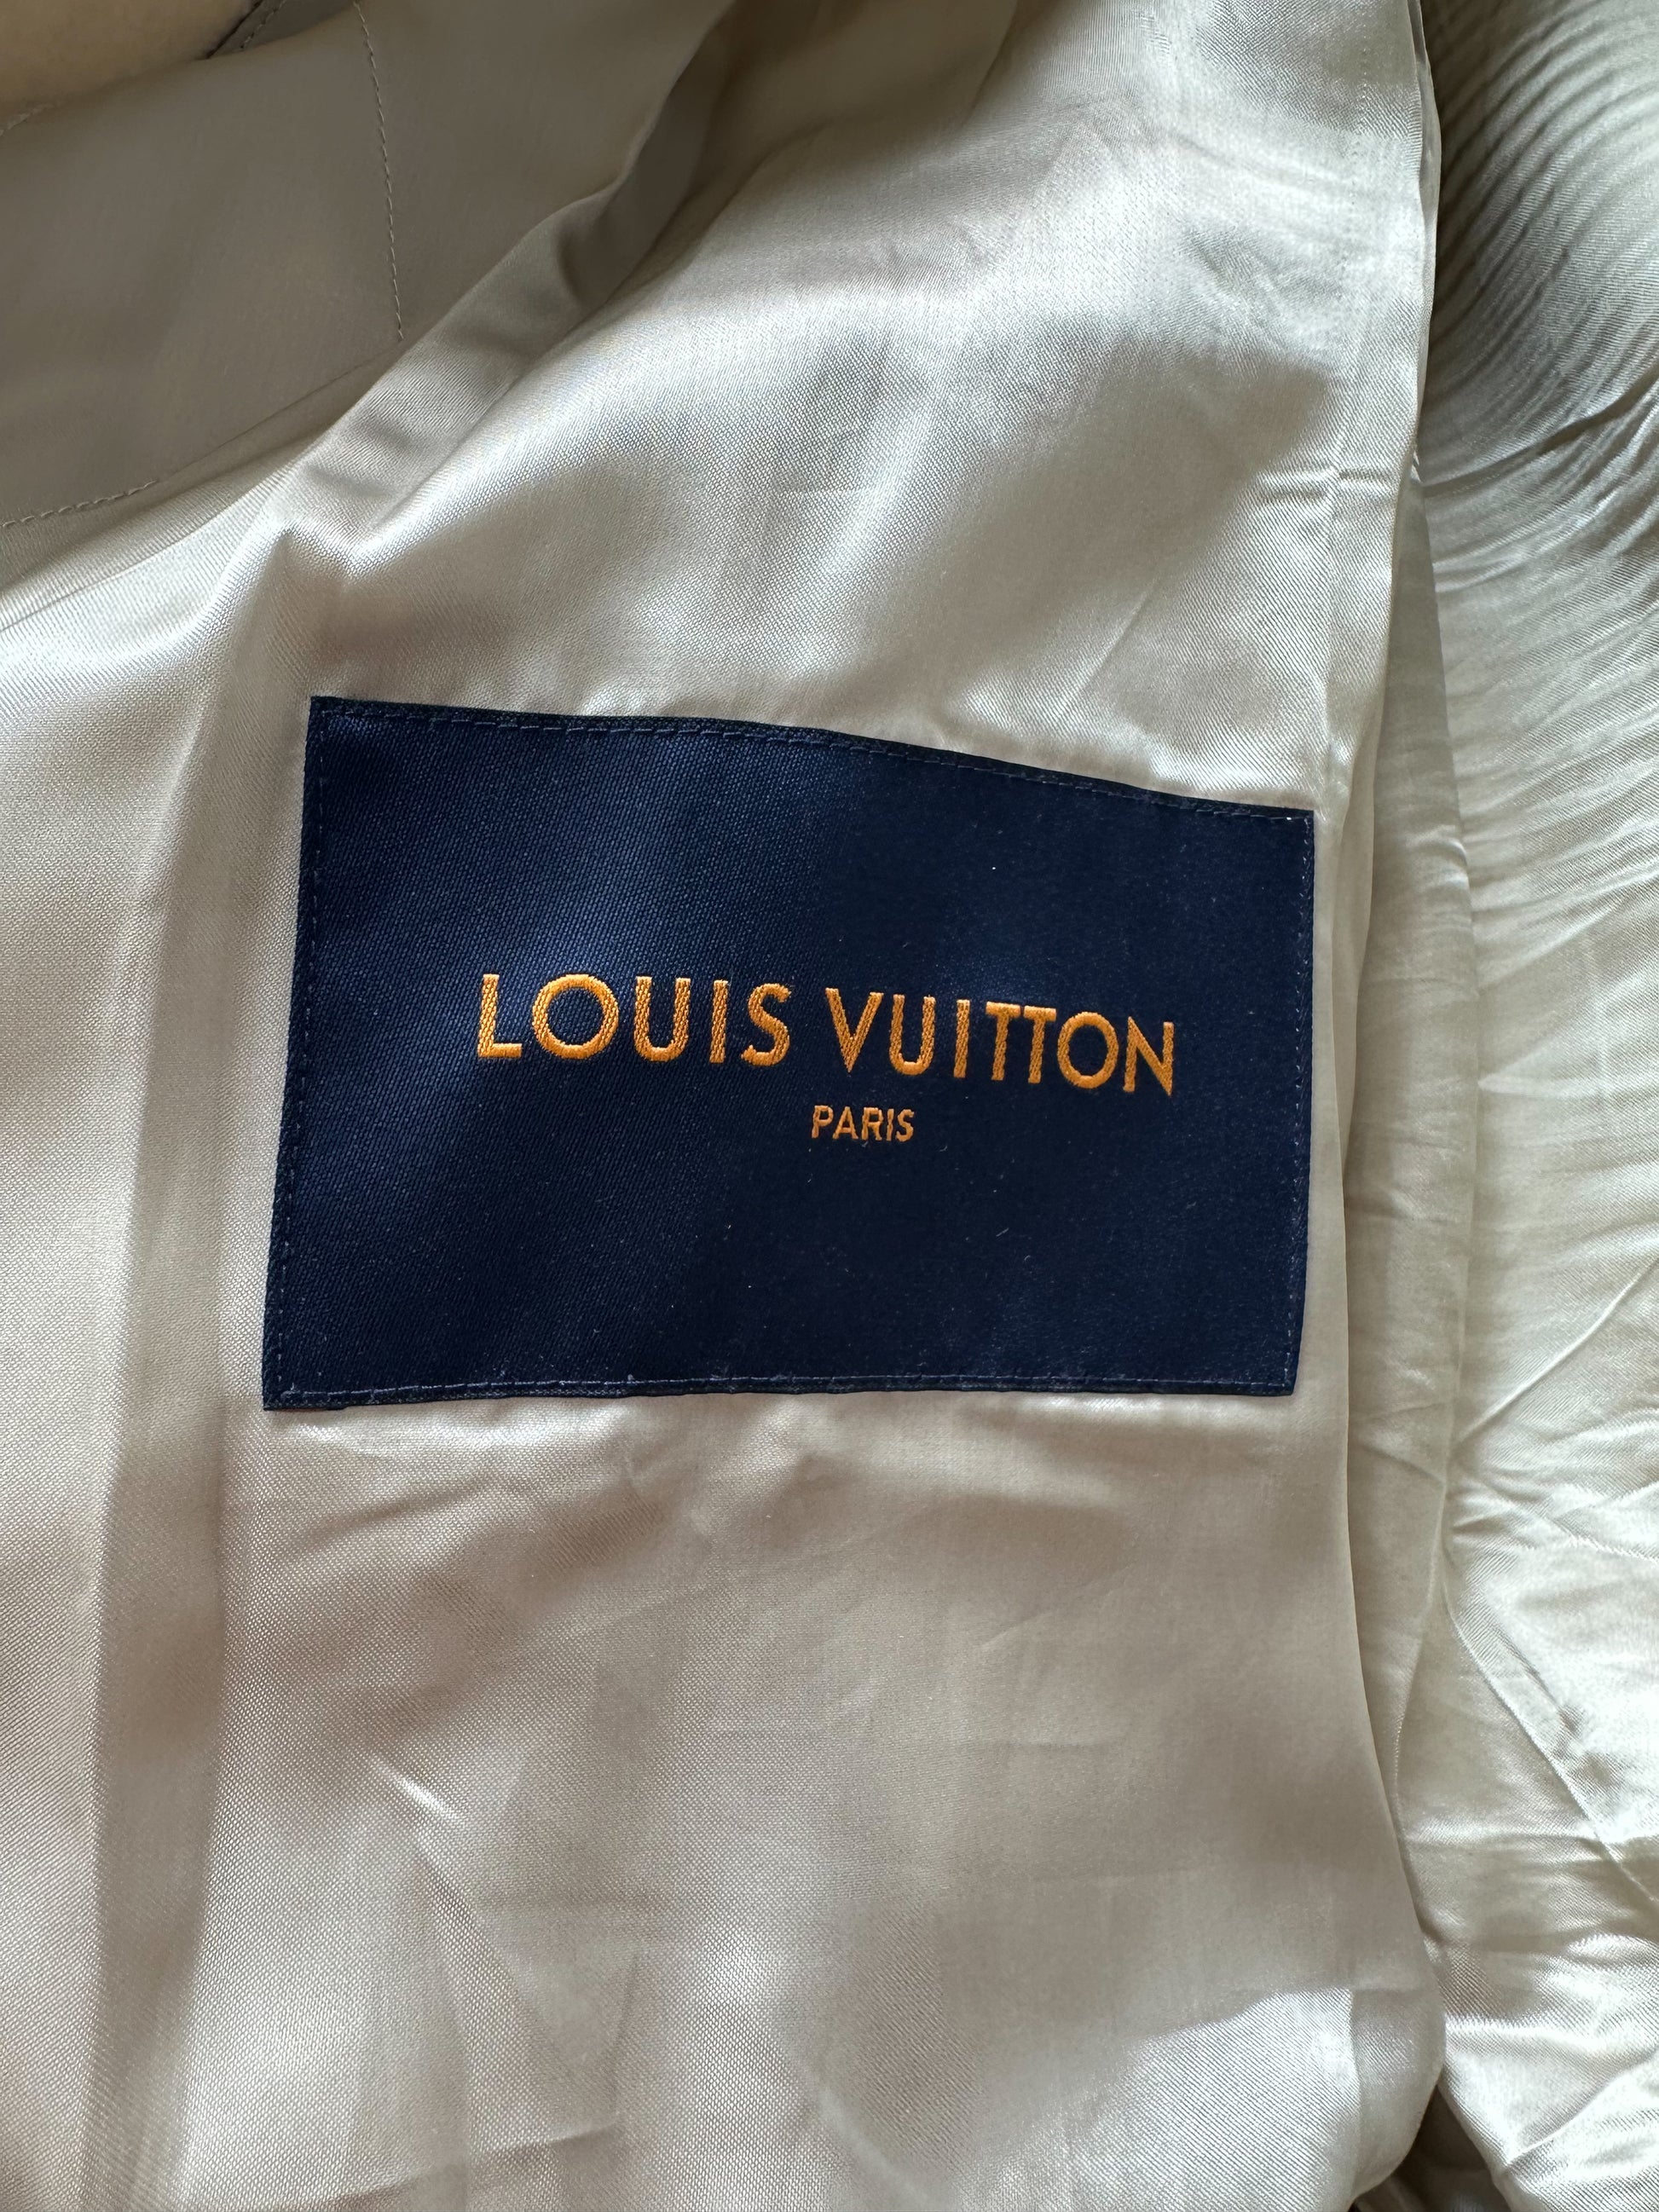 Louis Vuitton Purple and White Varsity Jacket - 8 Ball Jacket